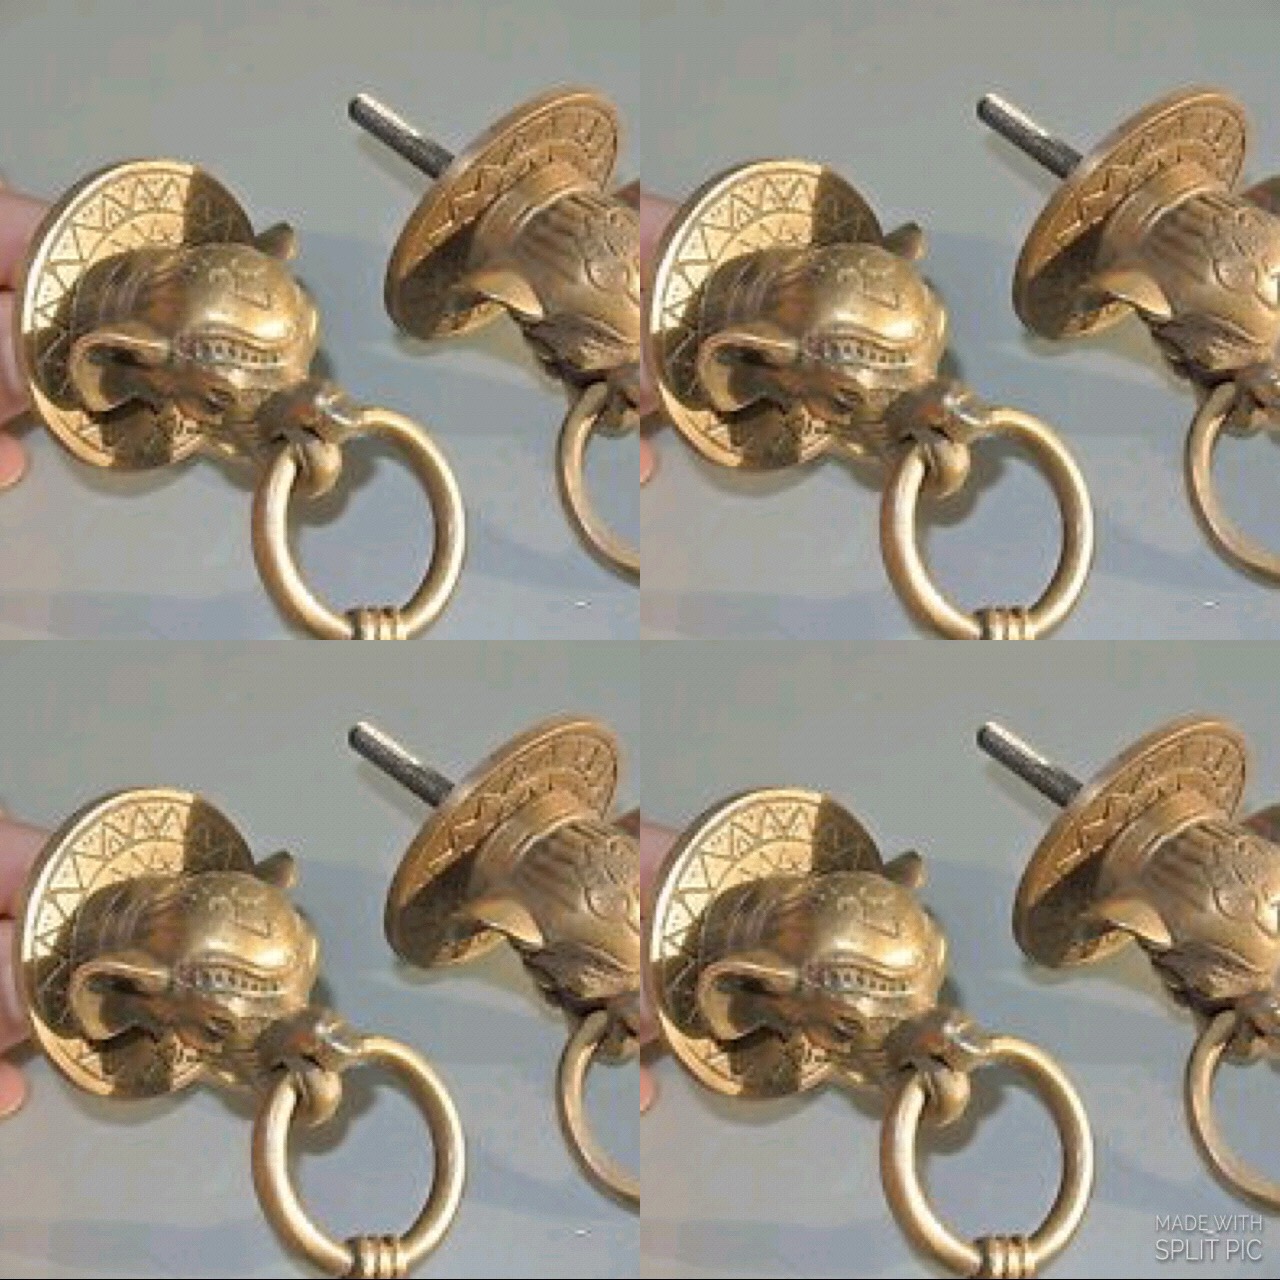 8 Elephant Pulls Handles Antique Solid Brass Vintage Drawer Knobs